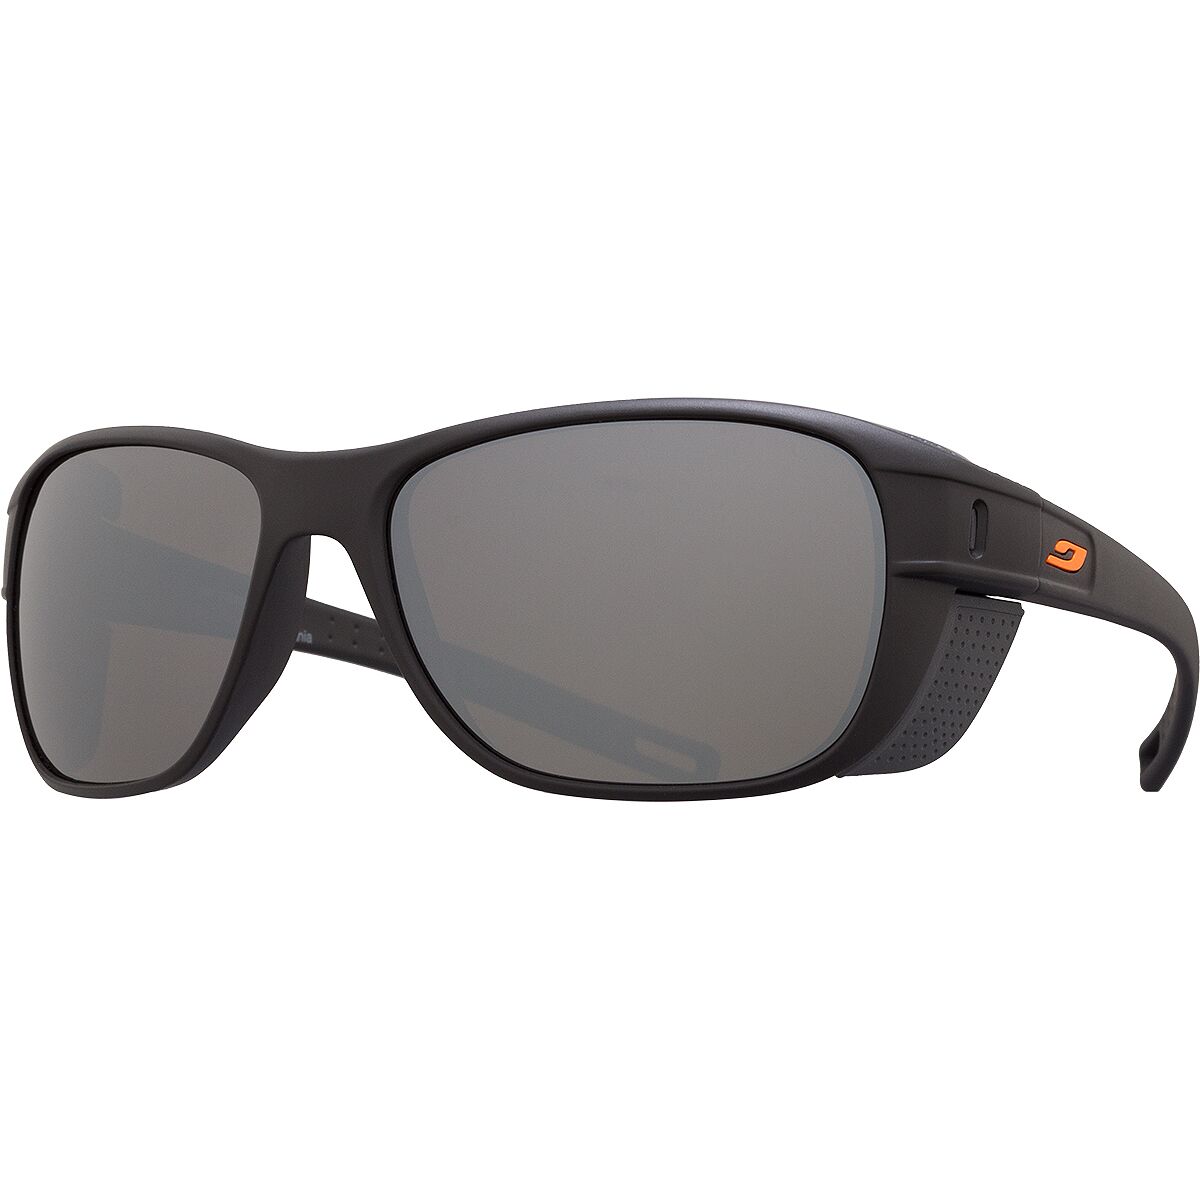 Julbo Camino Sunglasses Black/Spectron 4, One Size - Men's